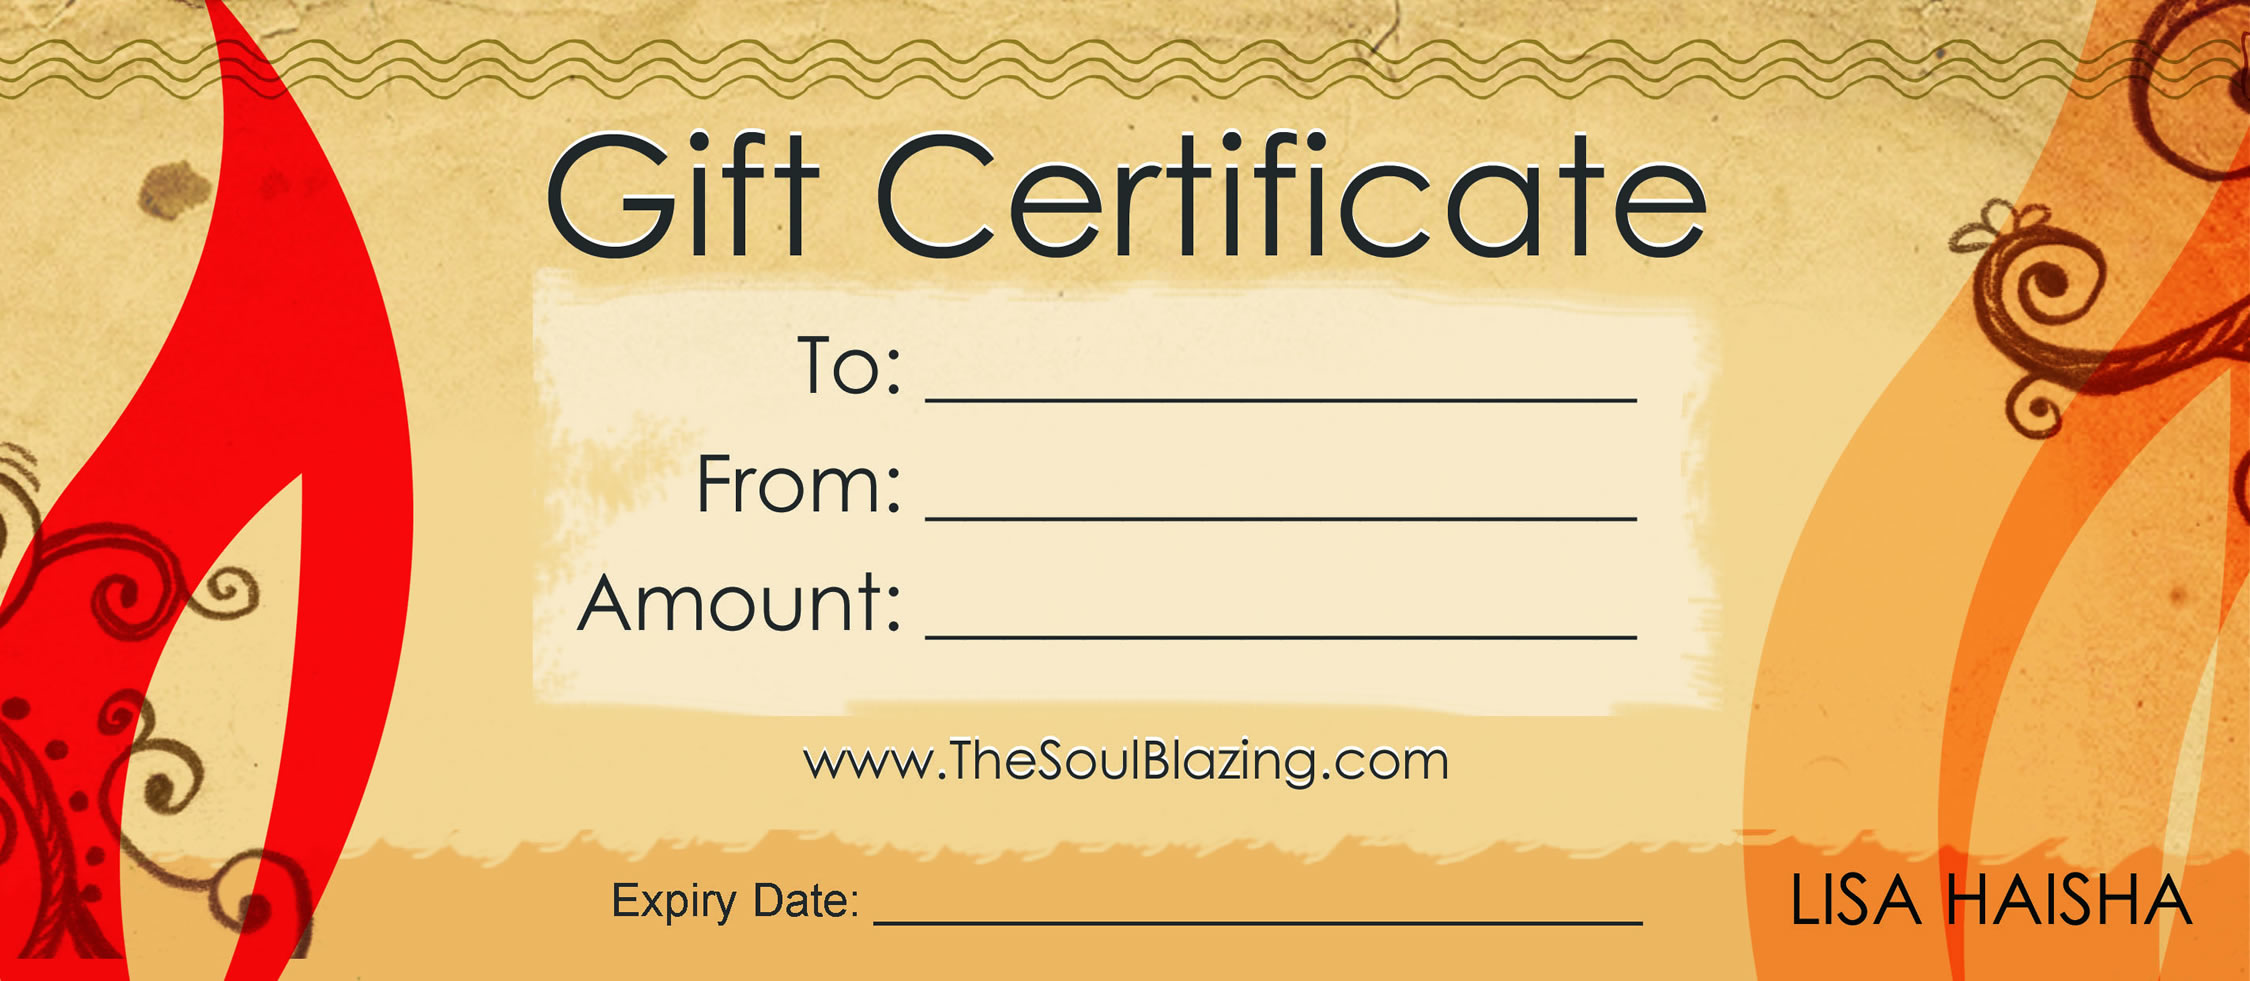 custom-printable-gift-certificates-online-nyc-canada-usa